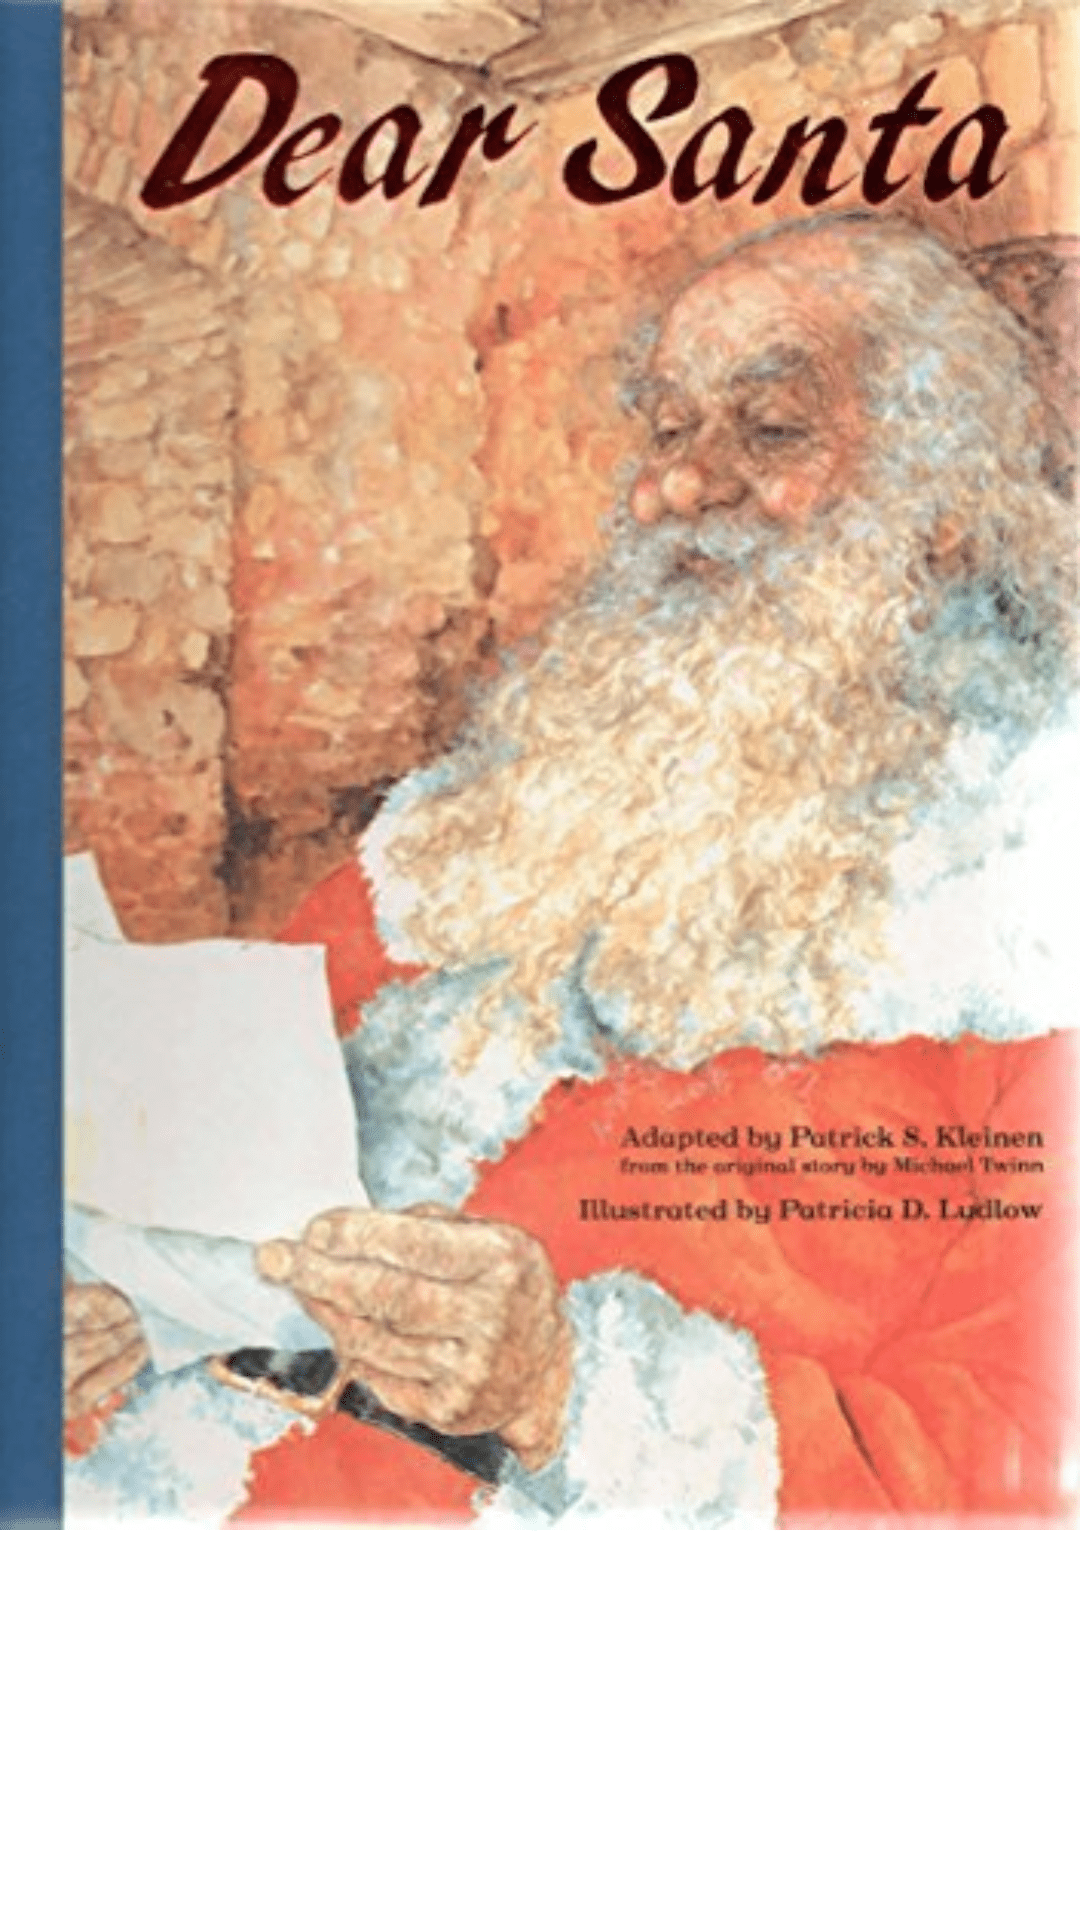 Dear Santa by Patrick S. Kleinen